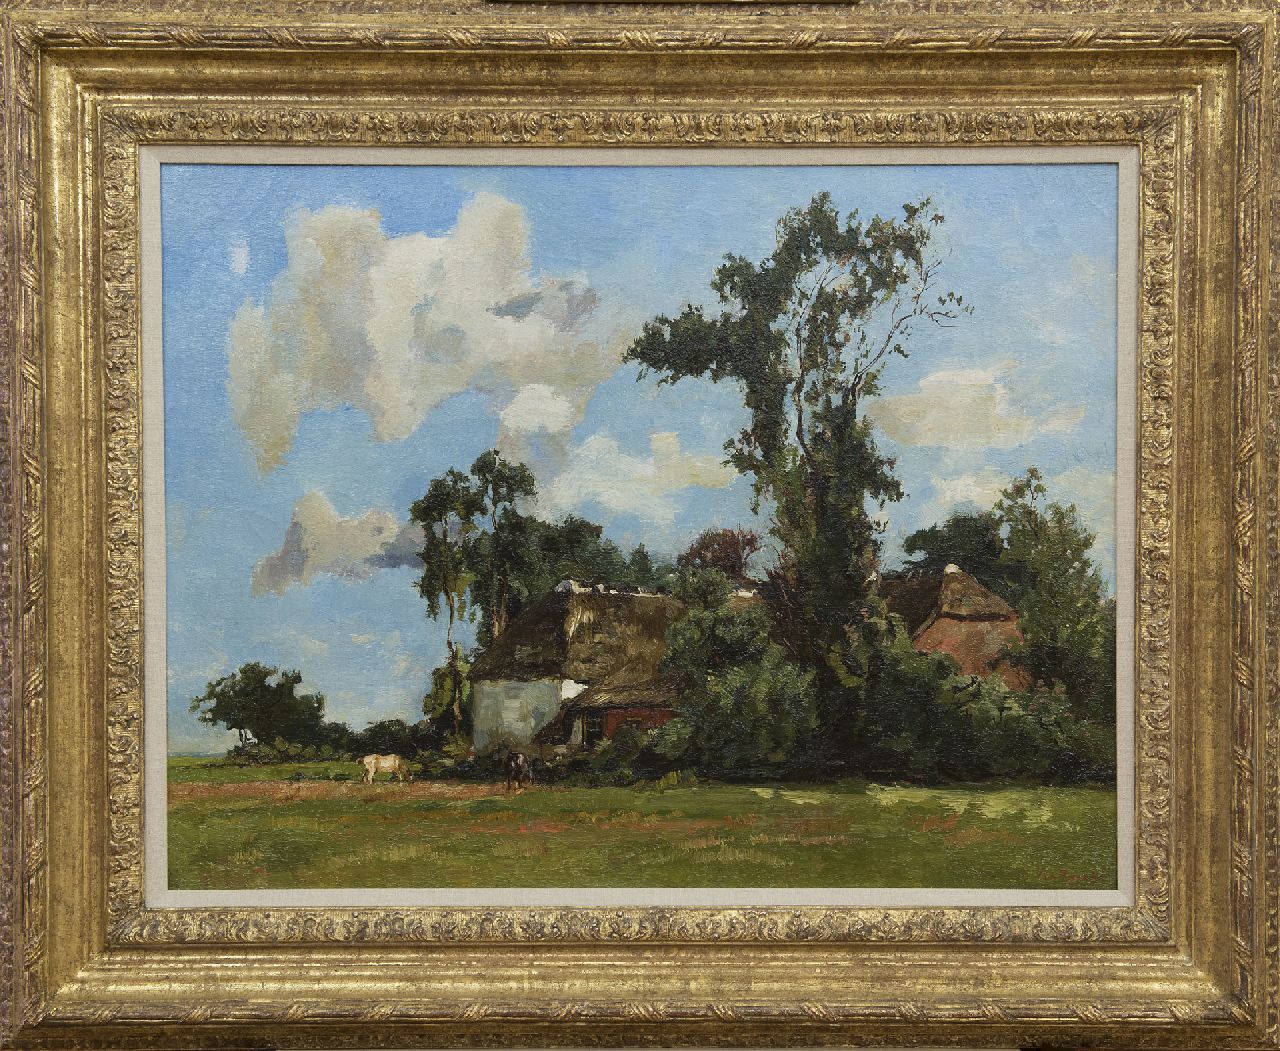 Zwart W.H.P.J. de | Wilhelmus Hendrikus Petrus Johannes 'Willem' de Zwart | Paintings offered for sale | A farmstead in summer, oil on canvas 50.5 x 65.4 cm, signed l.r.